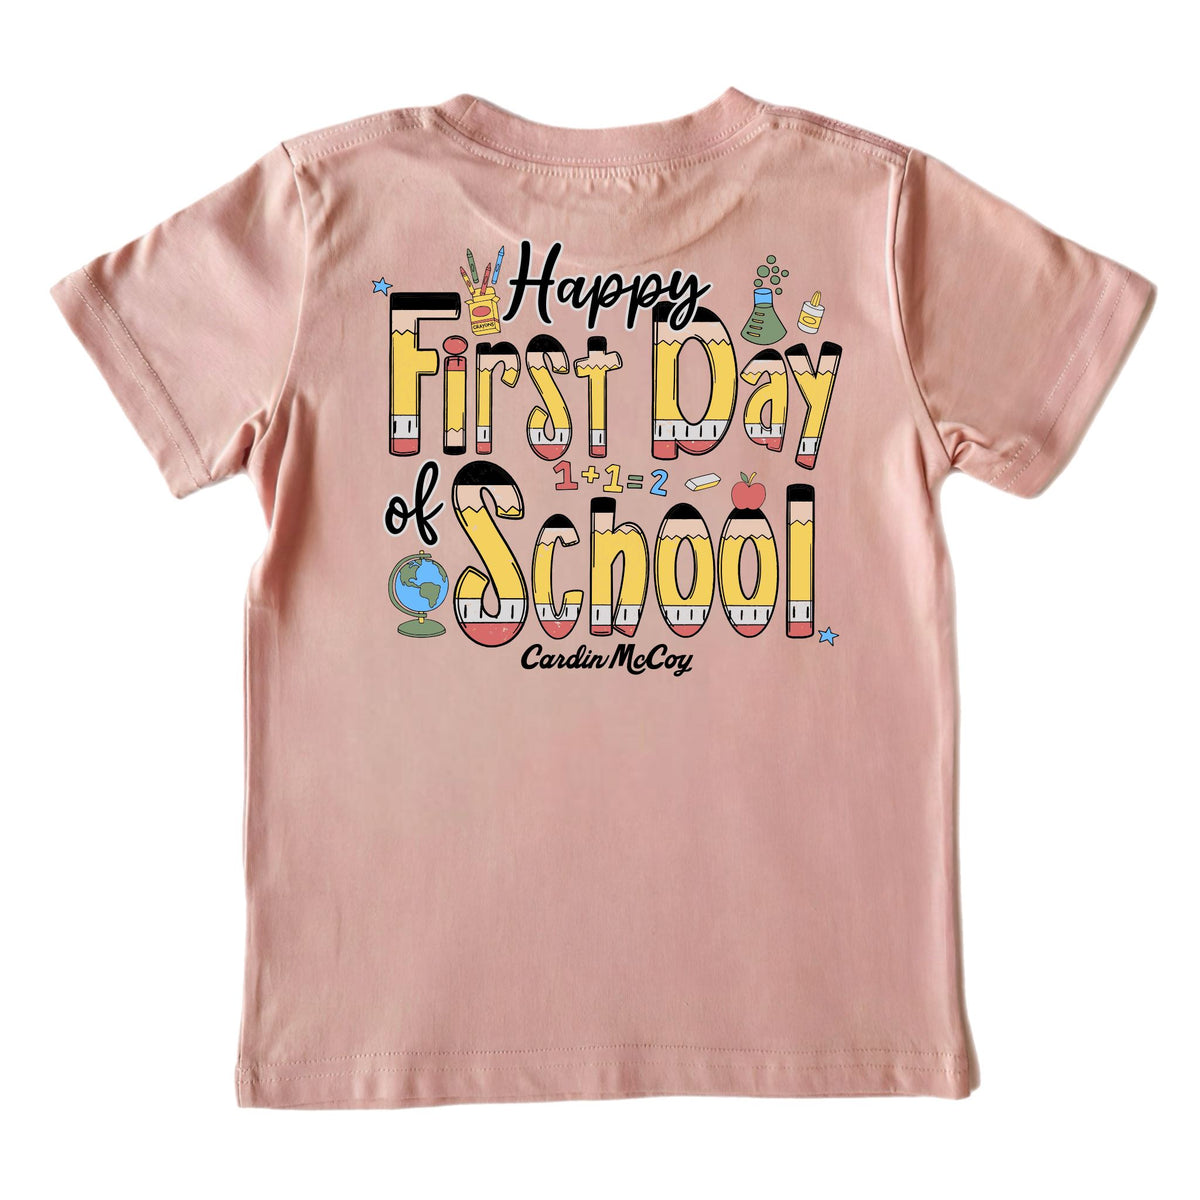 Kids' First Day of School Short-Sleeve Tee Short Sleeve T-Shirt Cardin McCoy Rose Tan XXS (2/3) Pocket